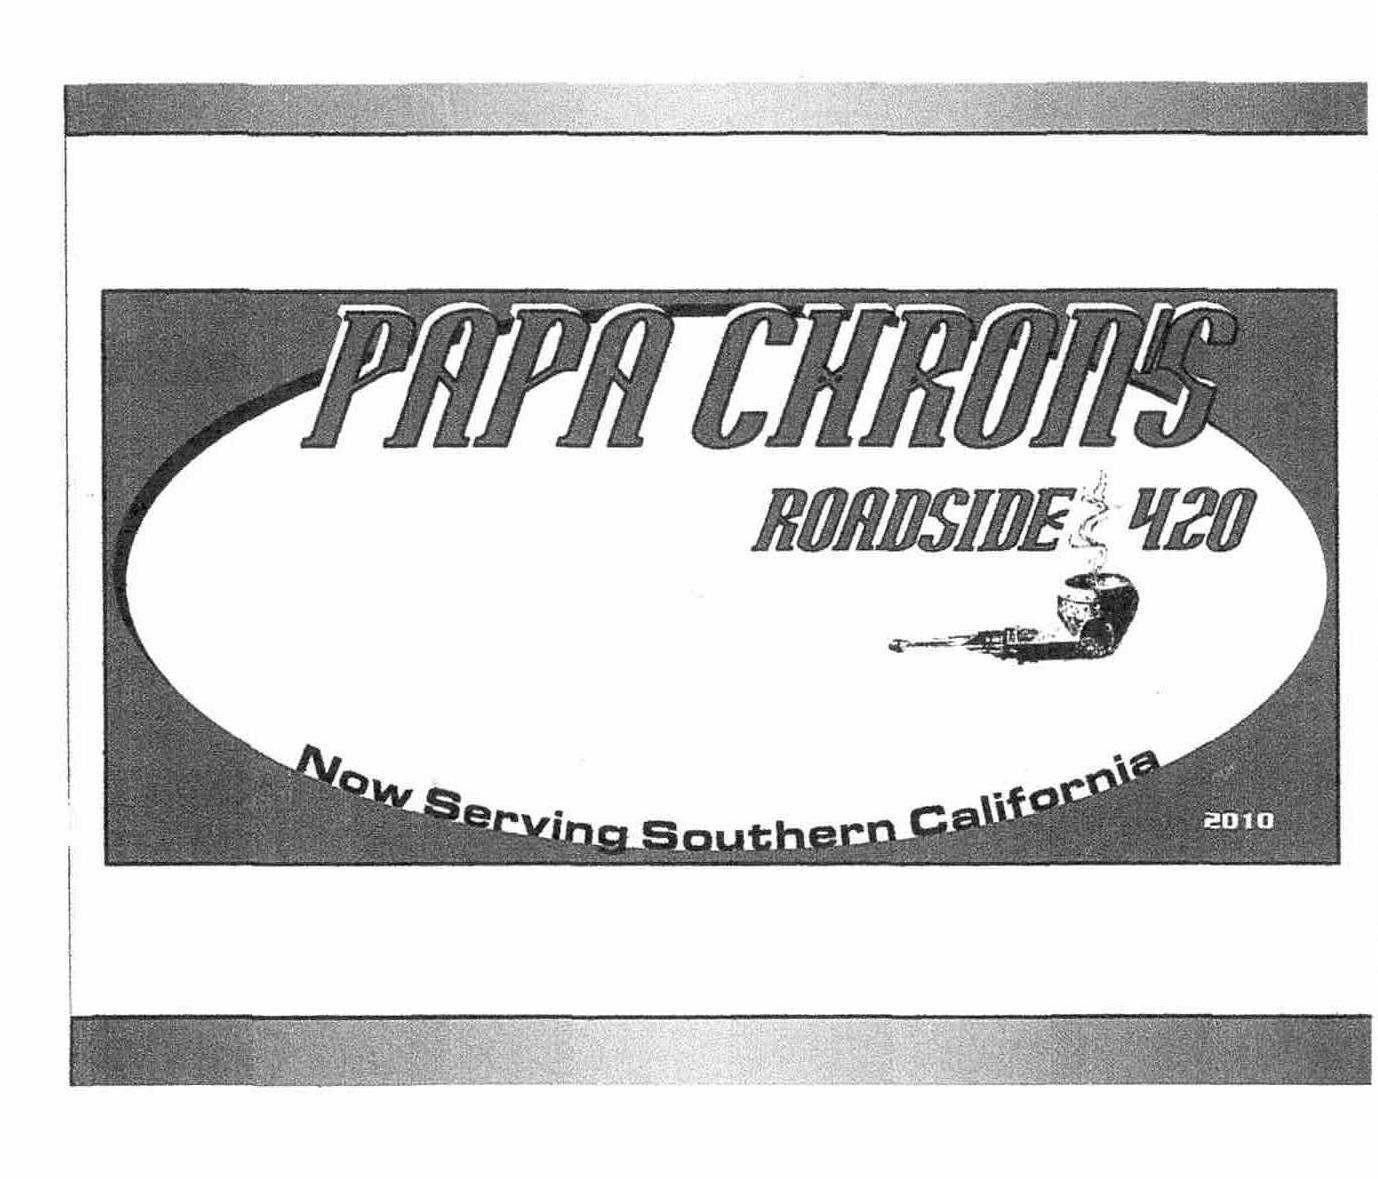  PAPA CHRON'S ROADSIDE 420 NOW SERVING SOUTHERN CALIFORNIA